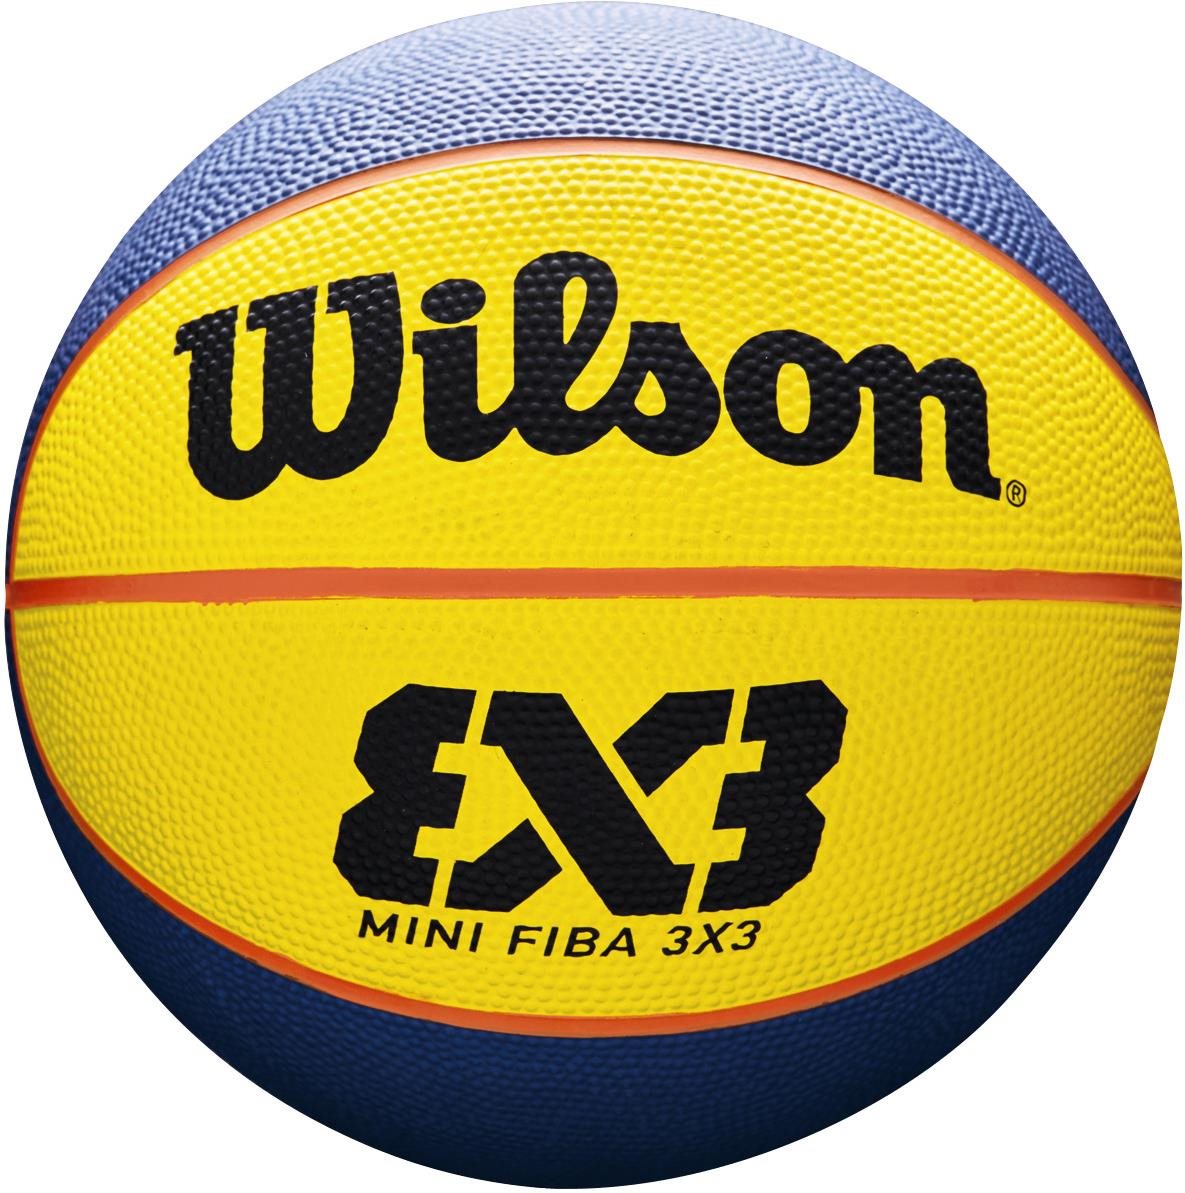 WILSON FIBA 3X3 MINI RUBBER BASKETBALL